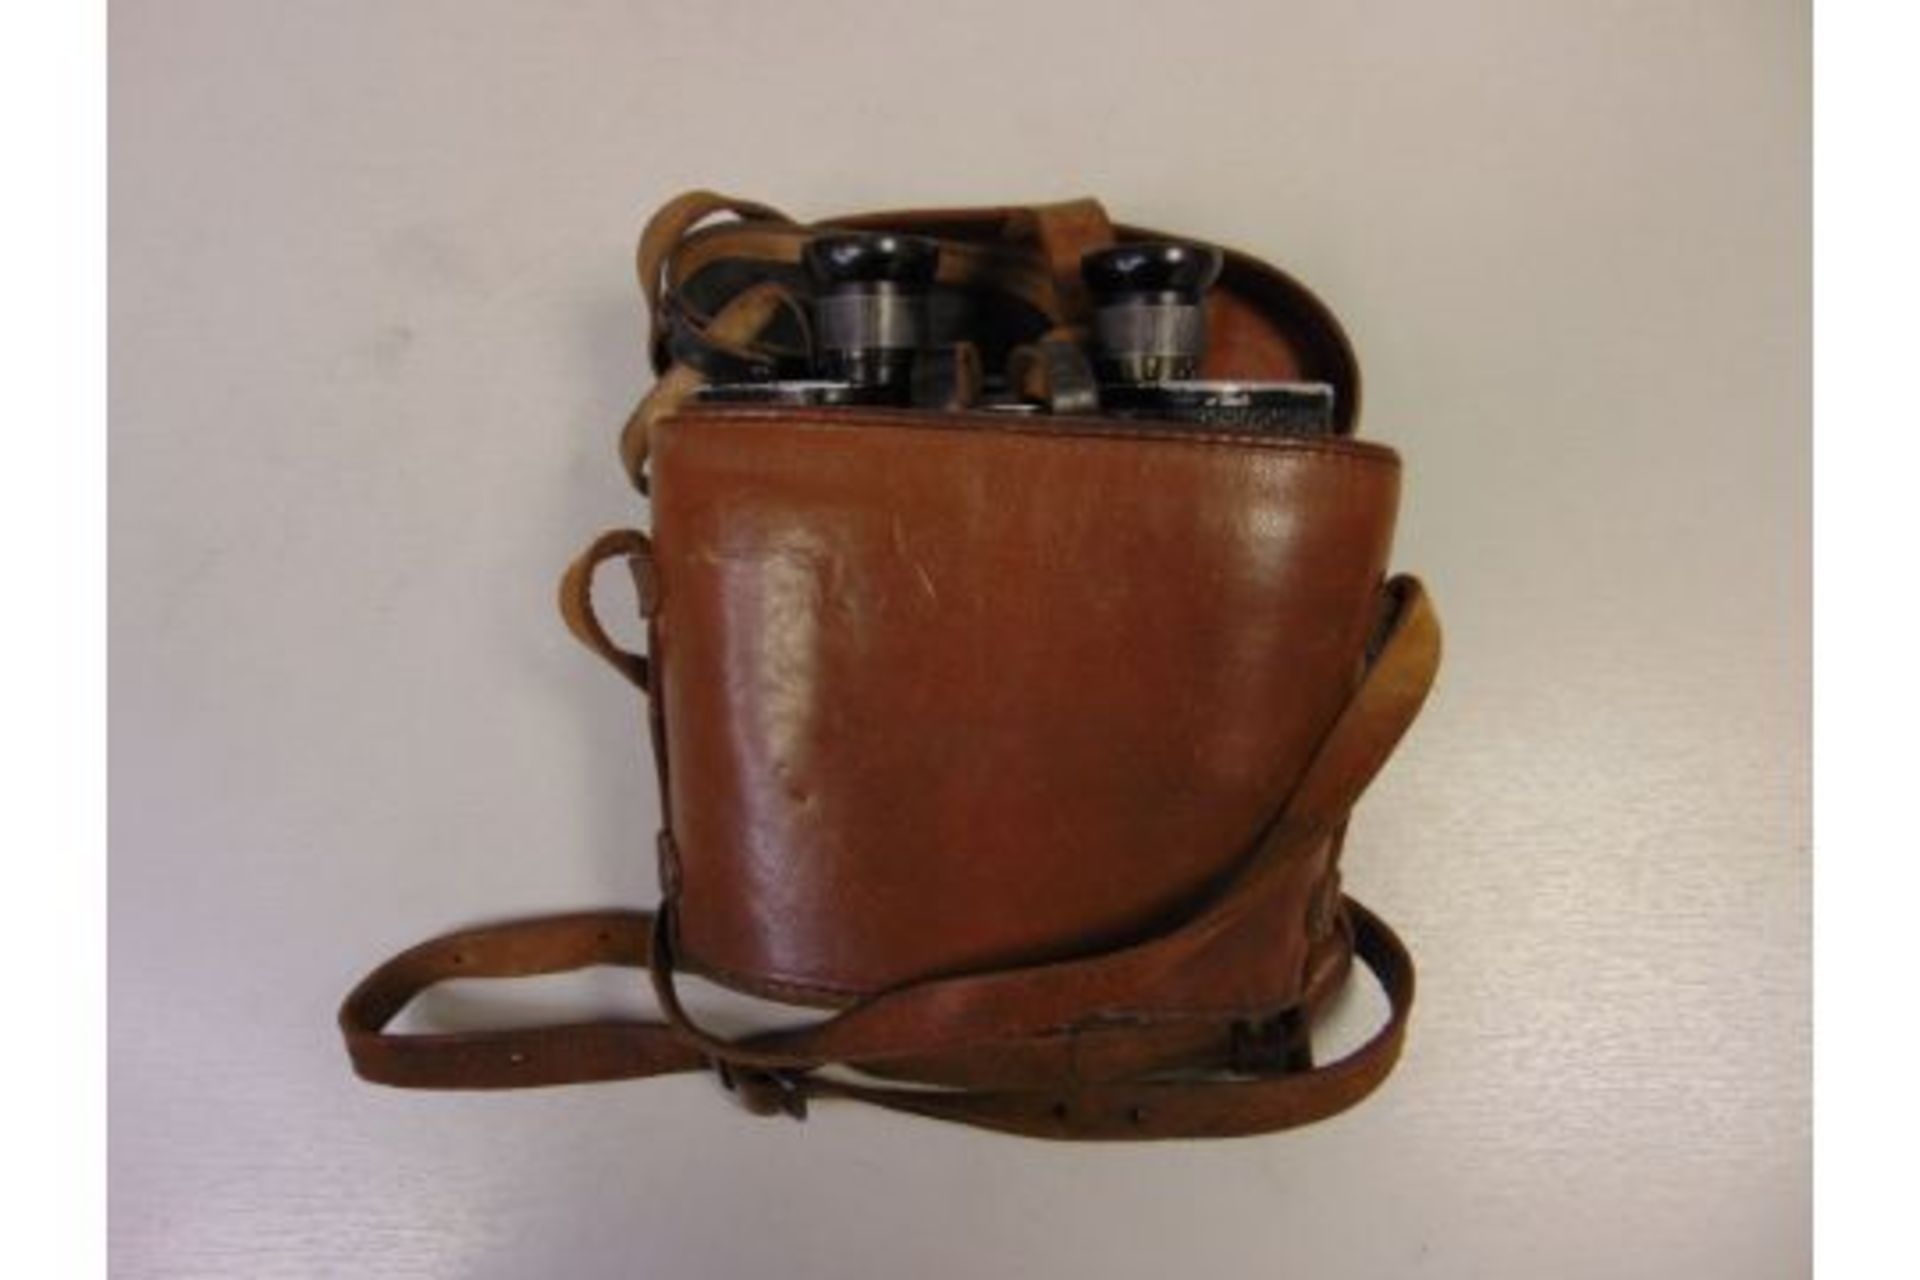 NIFE 6 x 30 Binoculars in Original Leather Case dated 1948 - Image 3 of 9